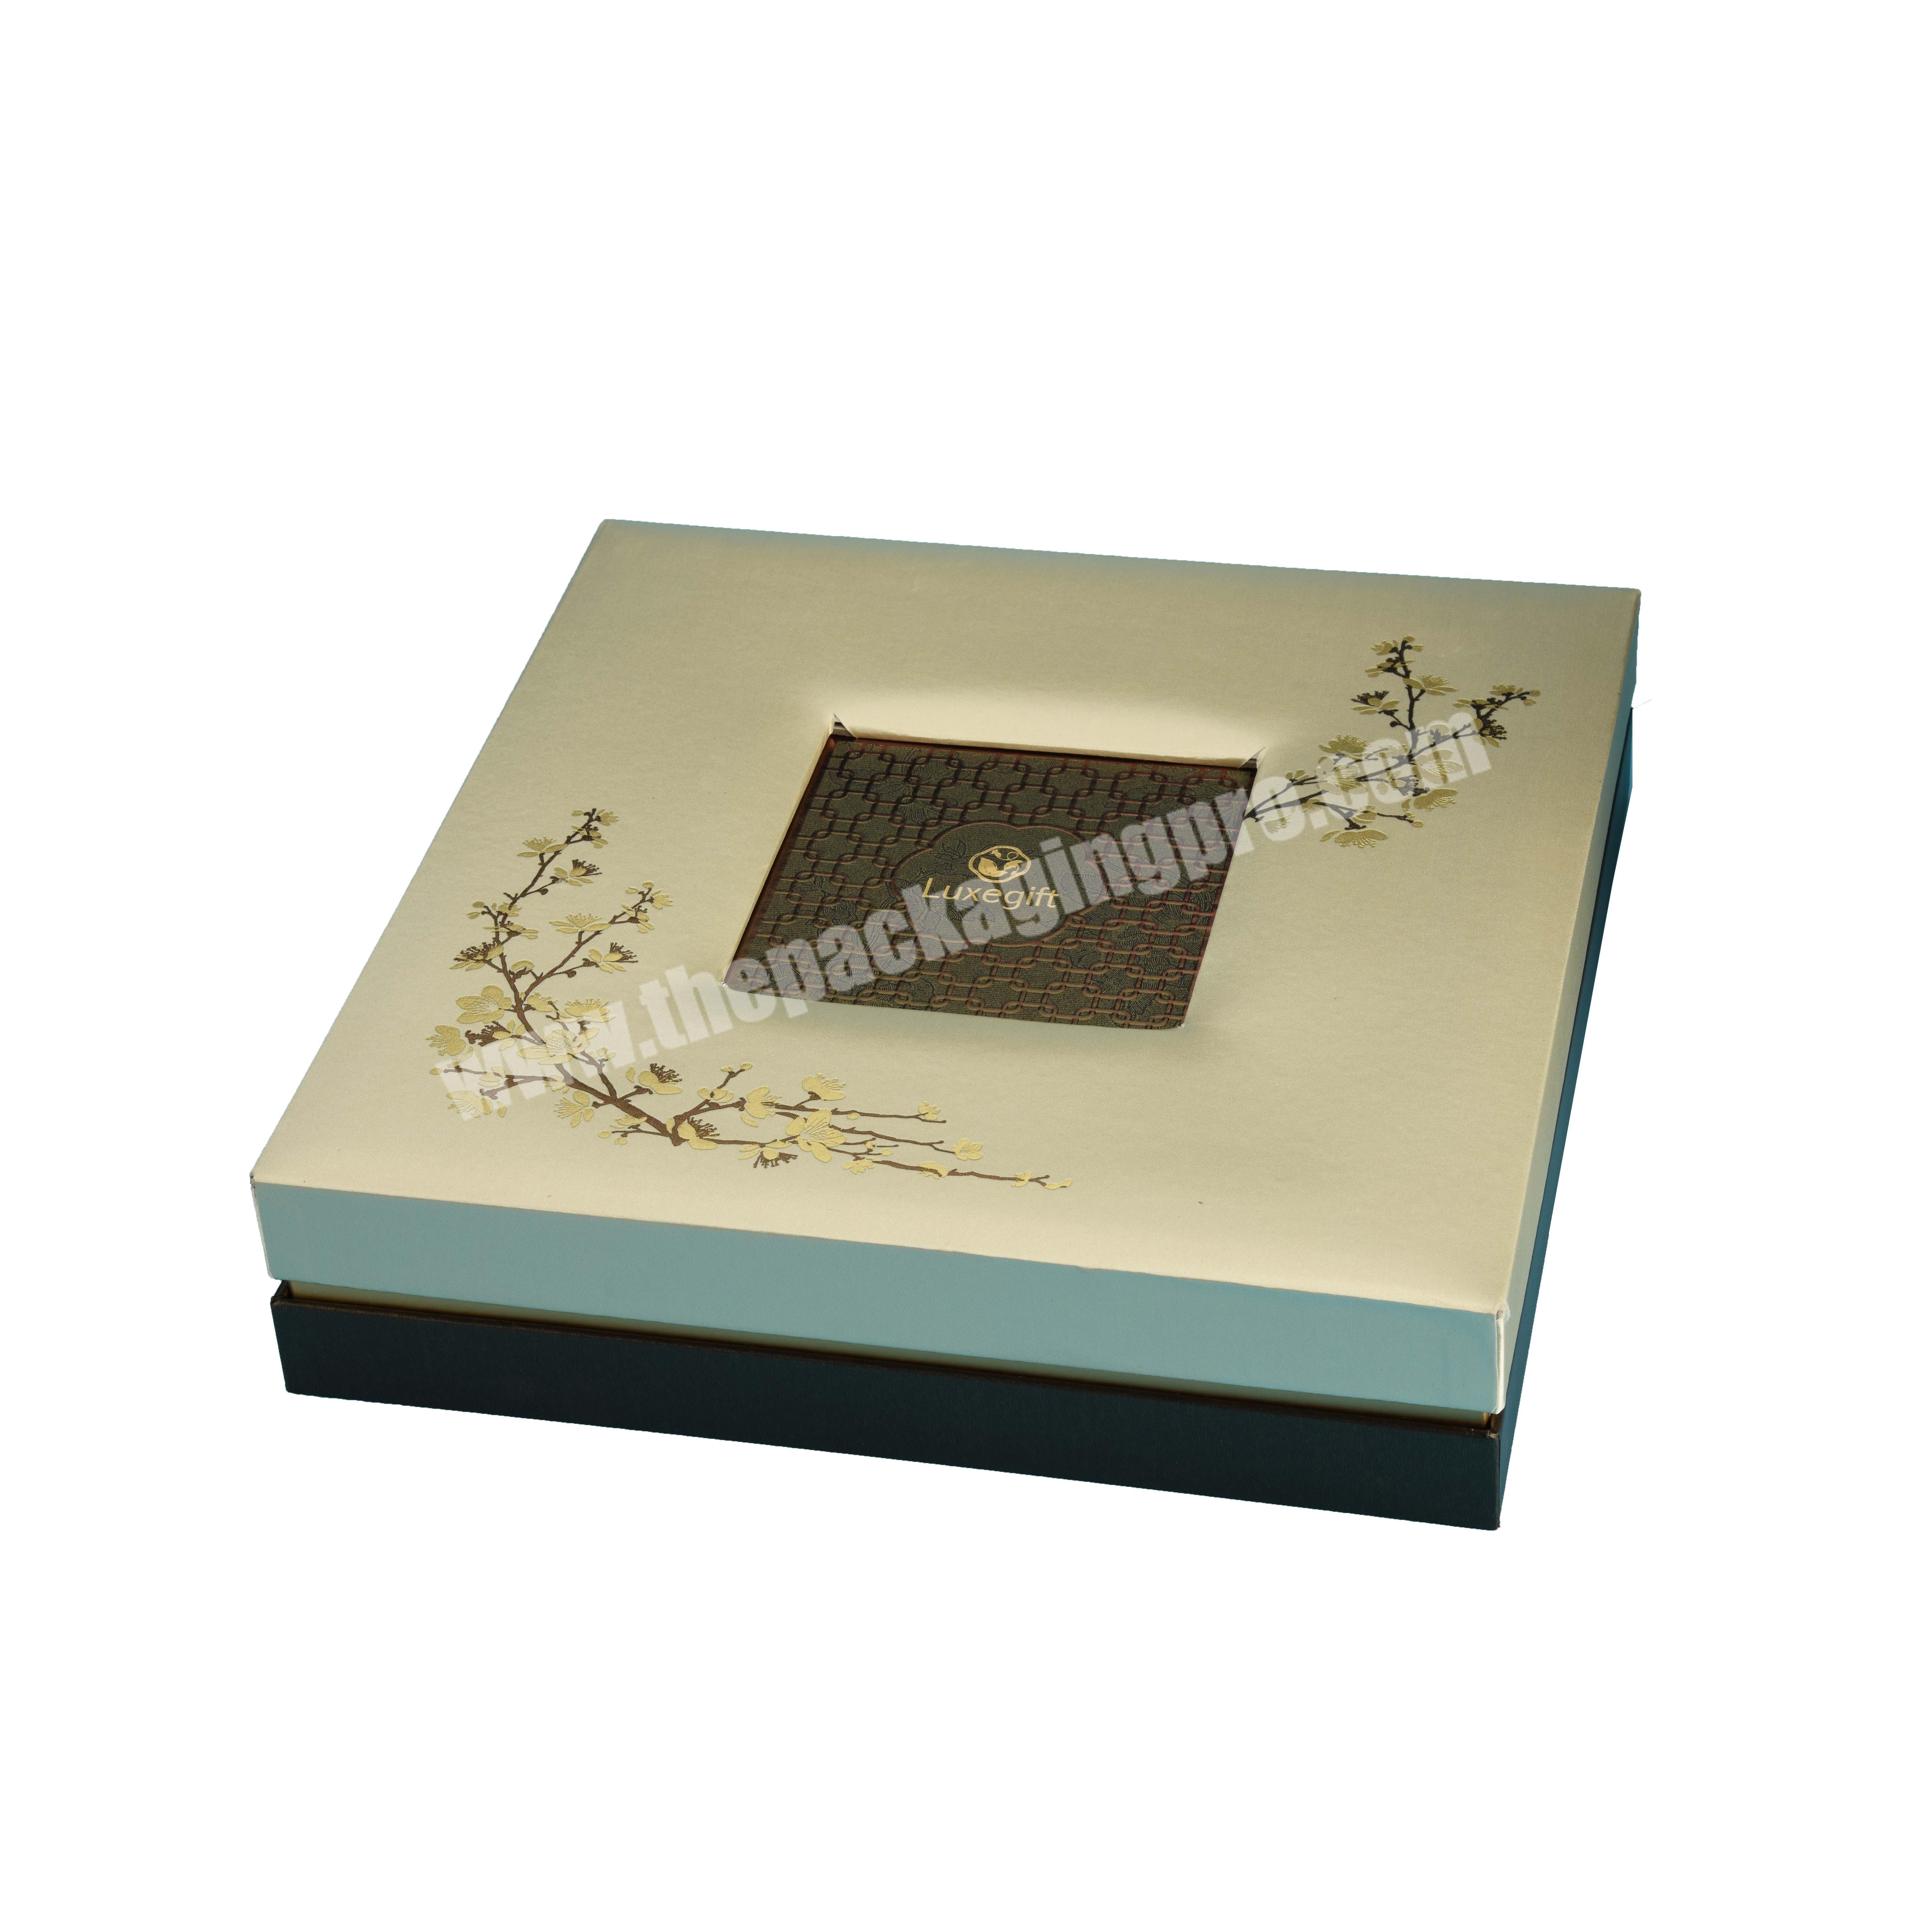 Colourless food grade plain craft rectangular wedding paper cake boxes for cakes